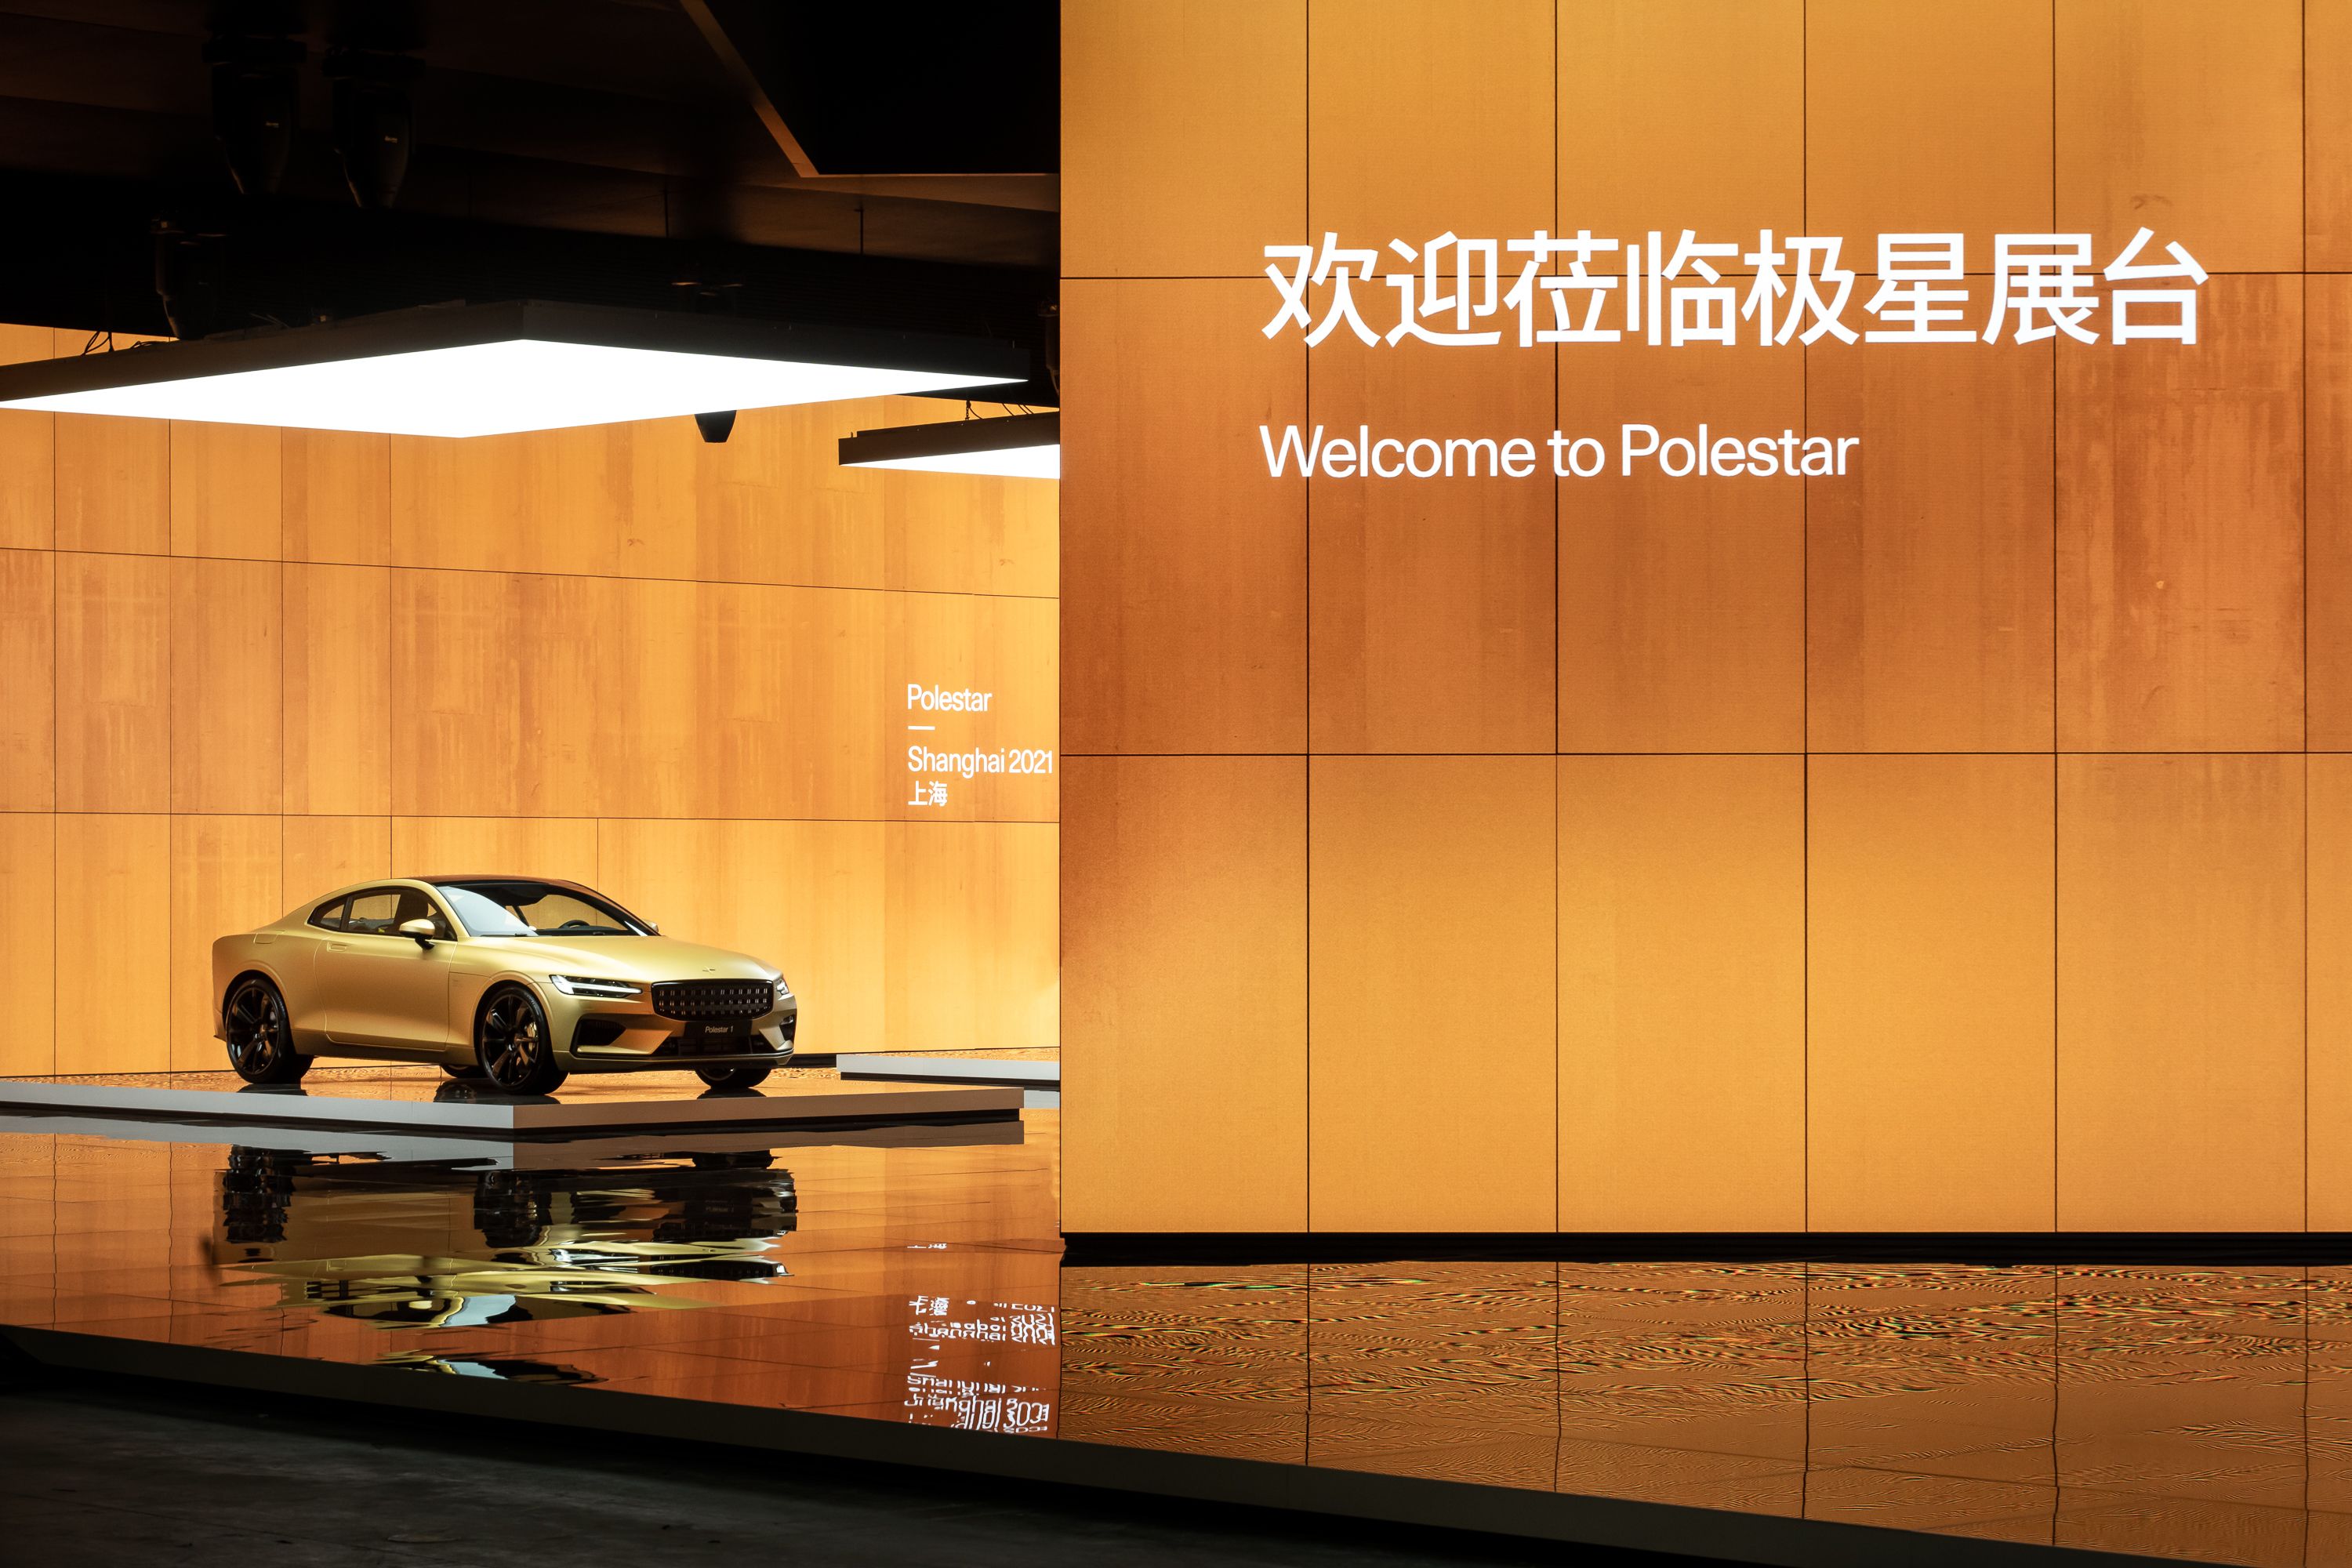 Alcantara shines at Auto Shanghai 2021